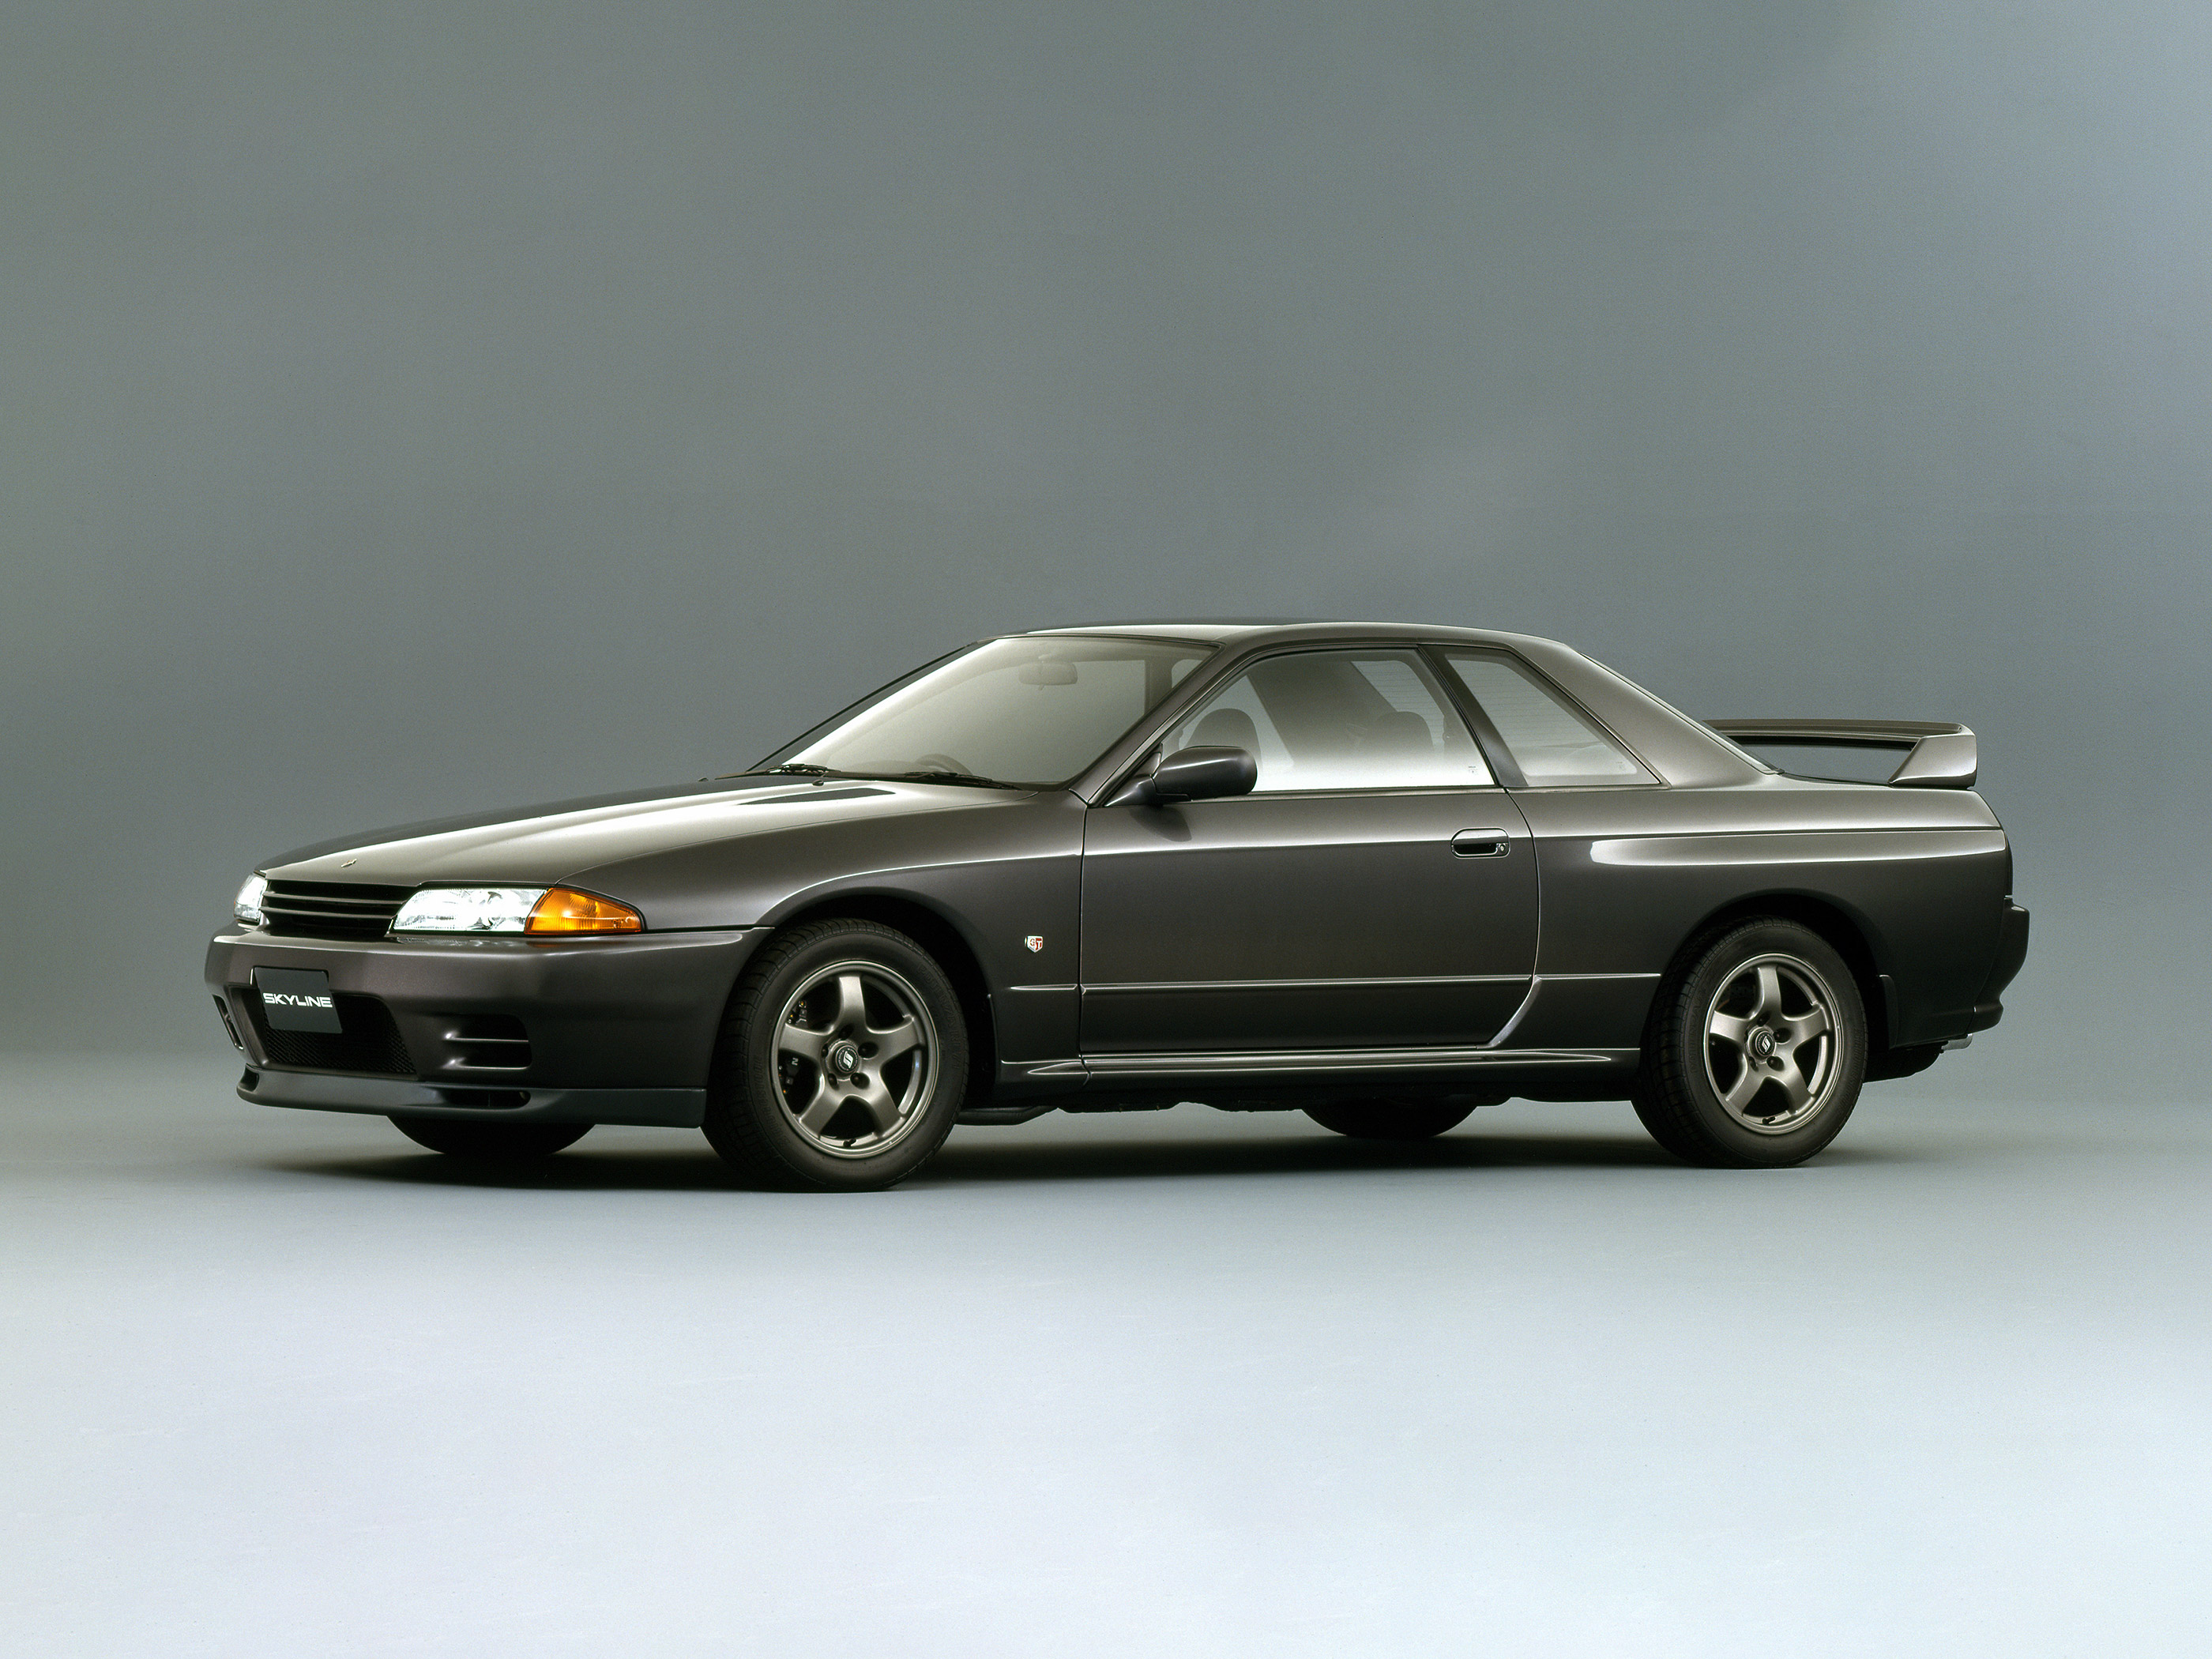  1989 Nissan Skyline GT-R Wallpaper.